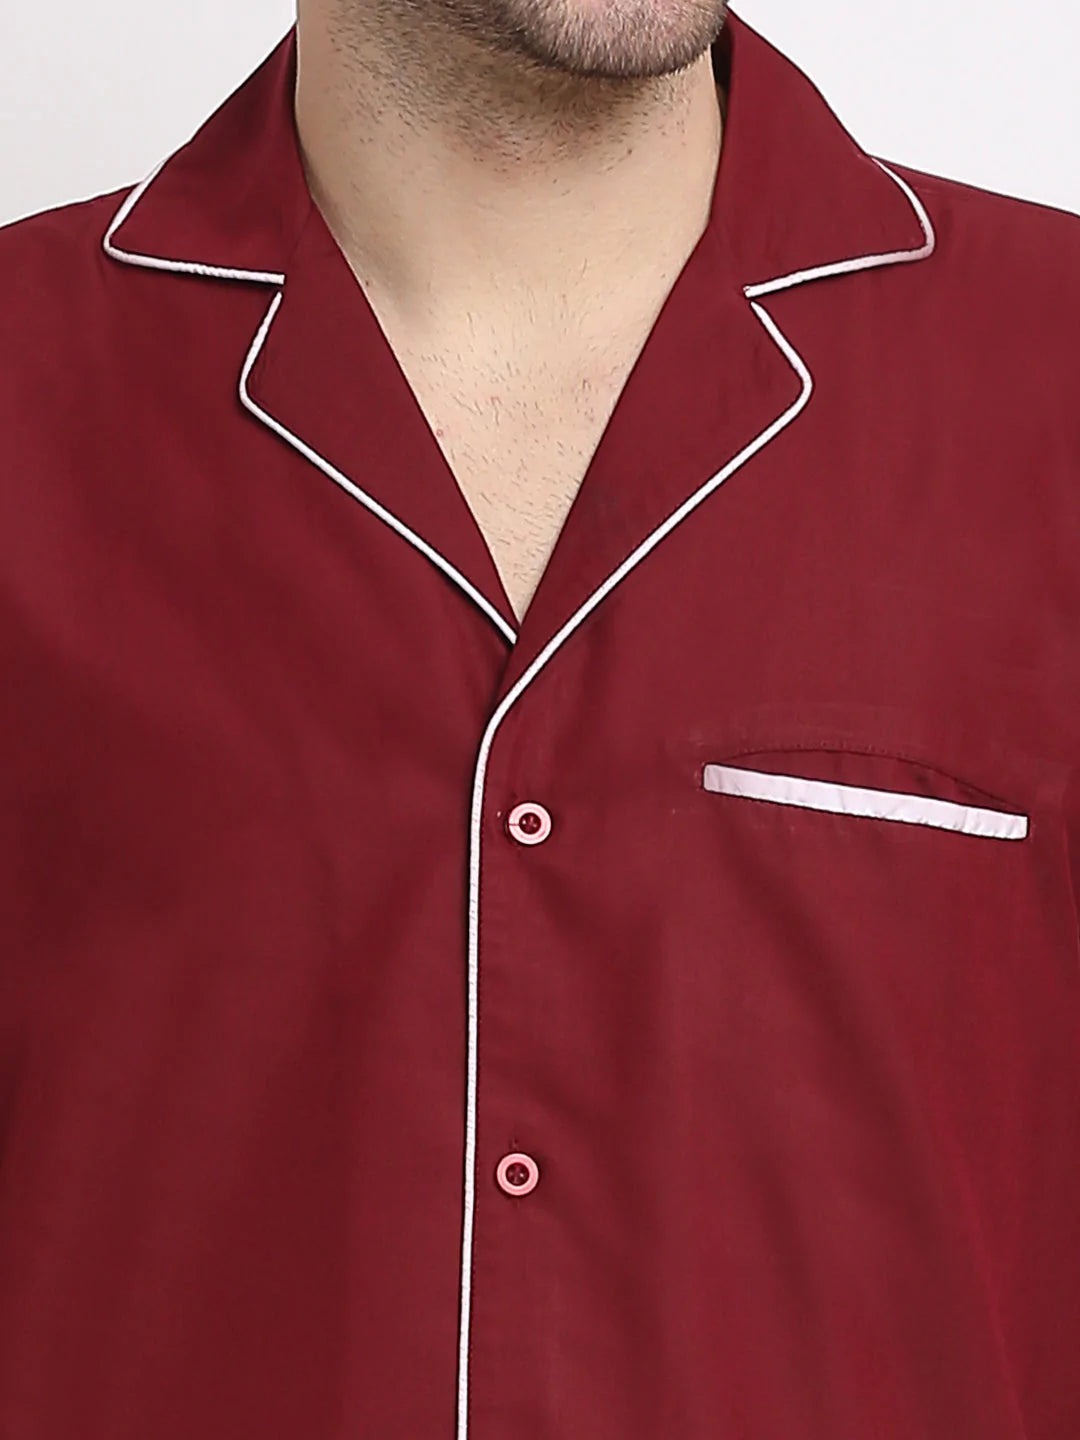 Jainish Men's Maroon Cotton Solid Night Suits ( GNS 003Maroon )